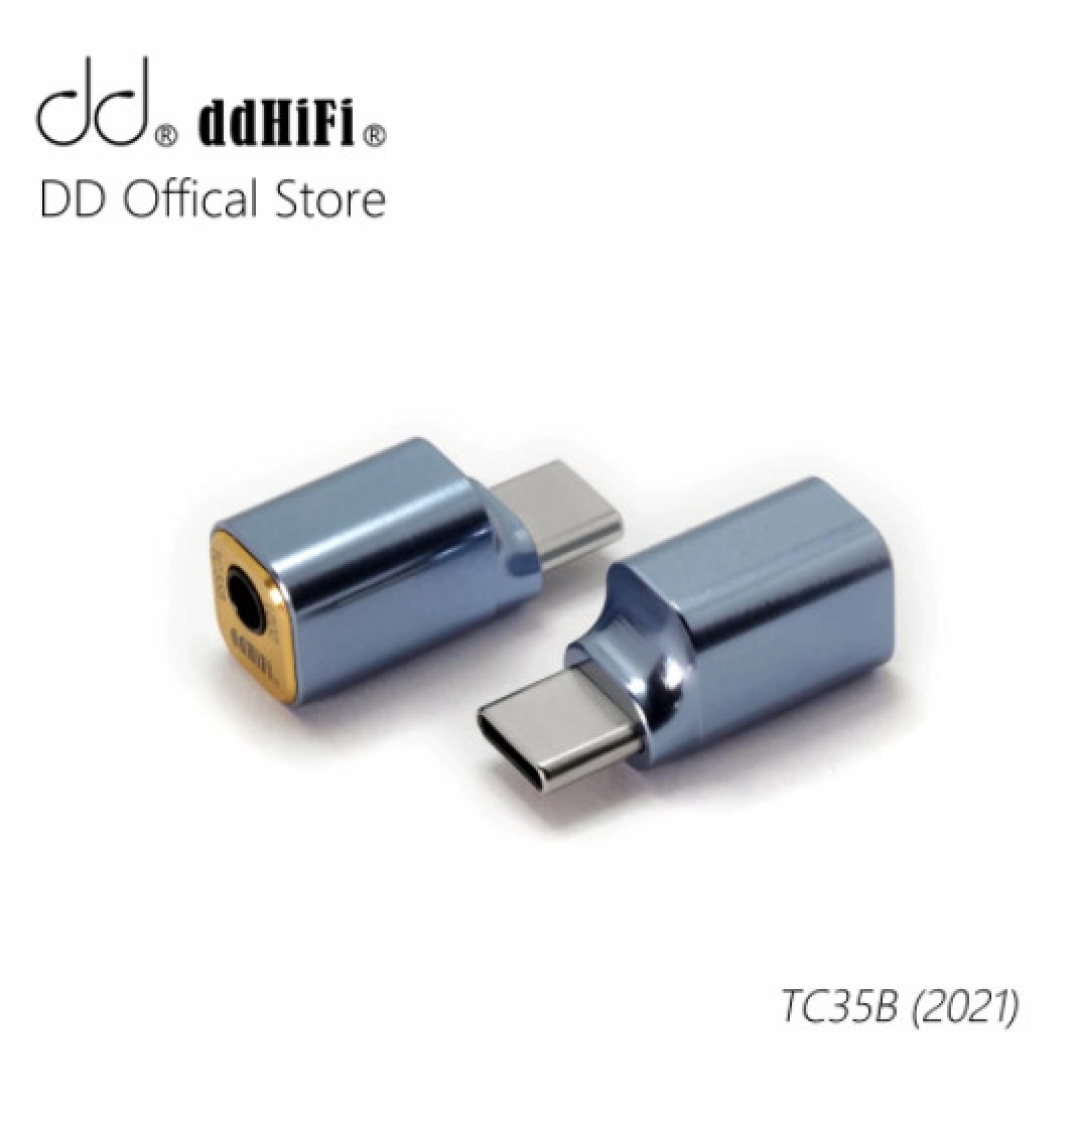 USB C ra 3.5 Adapter ddHiFi TC35B